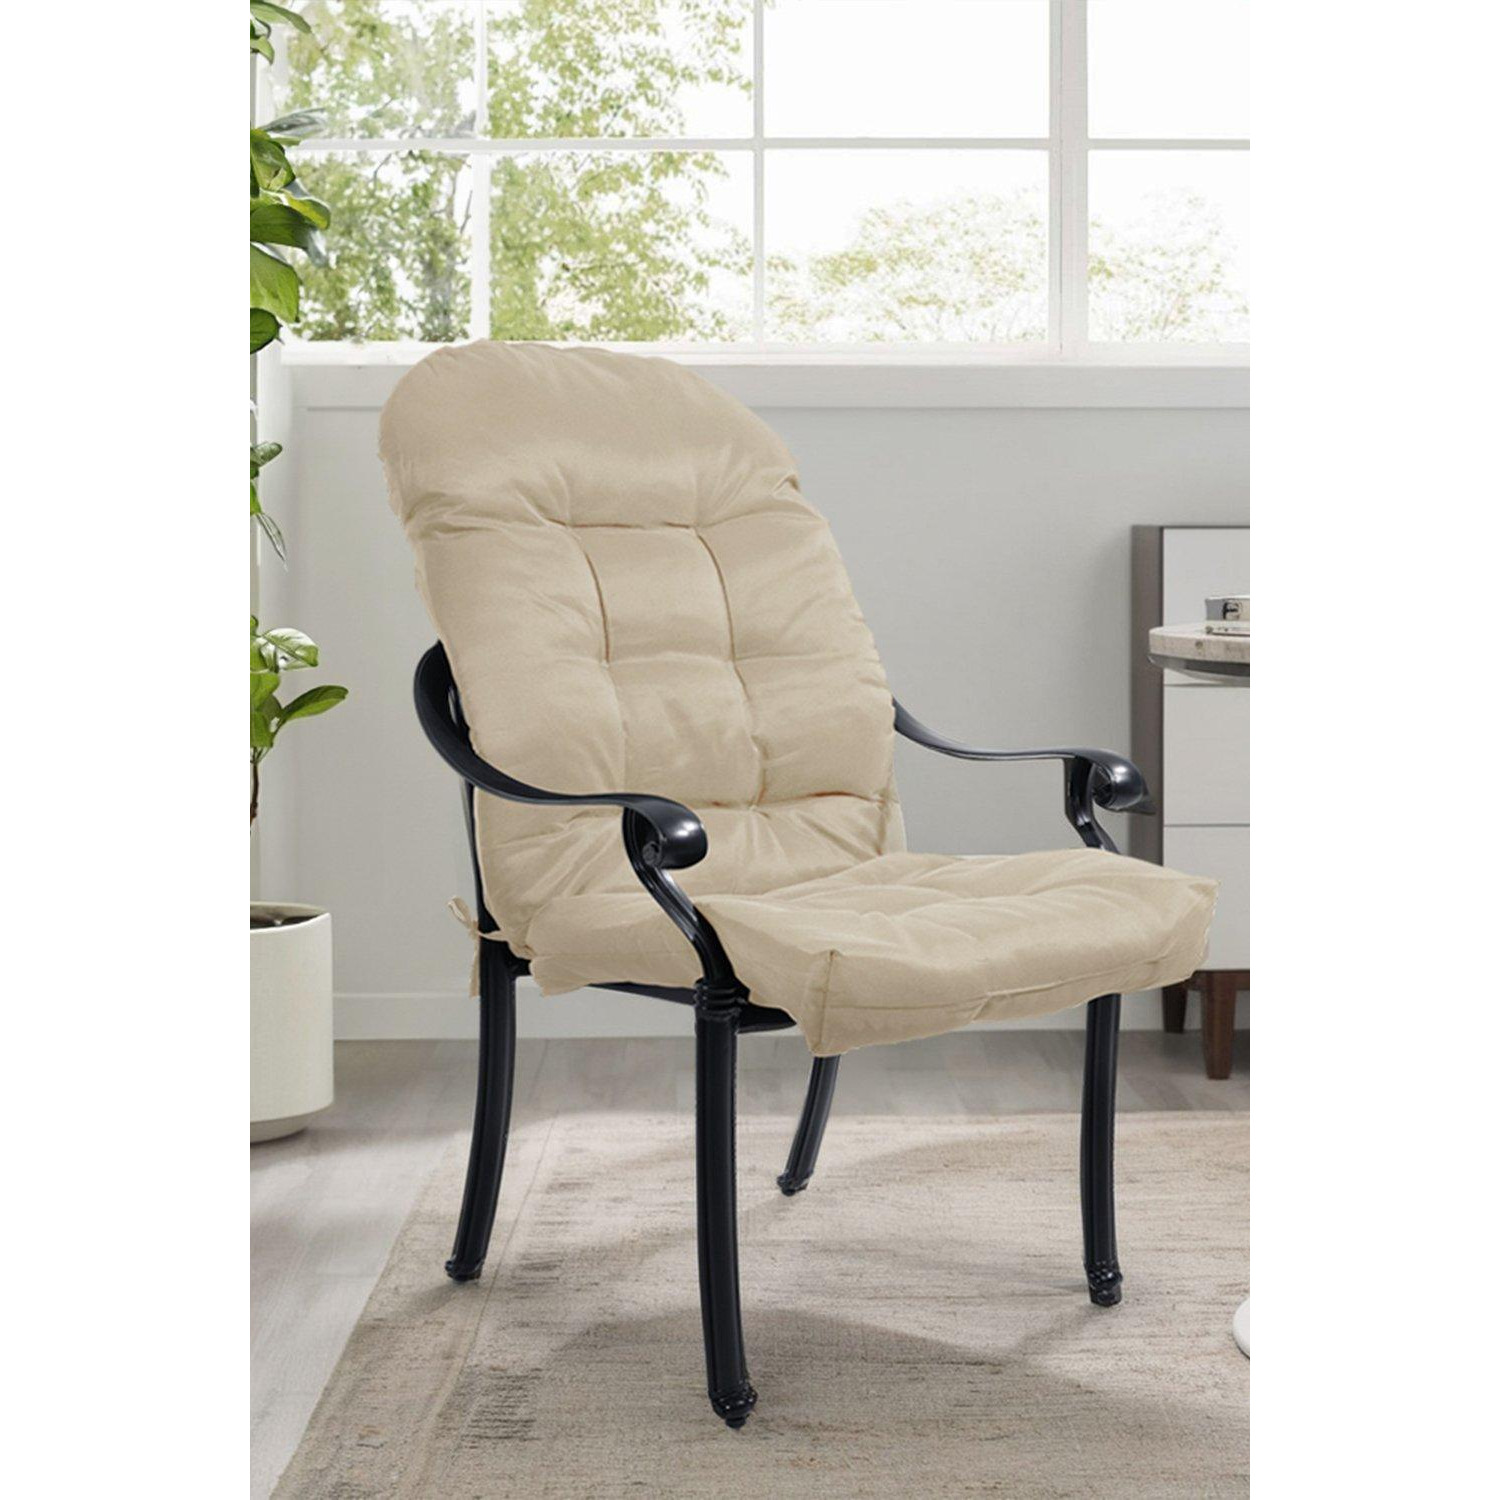 110CM x 48CM Outdoor Waterproof Tufted Swing Seat Cushion - image 1